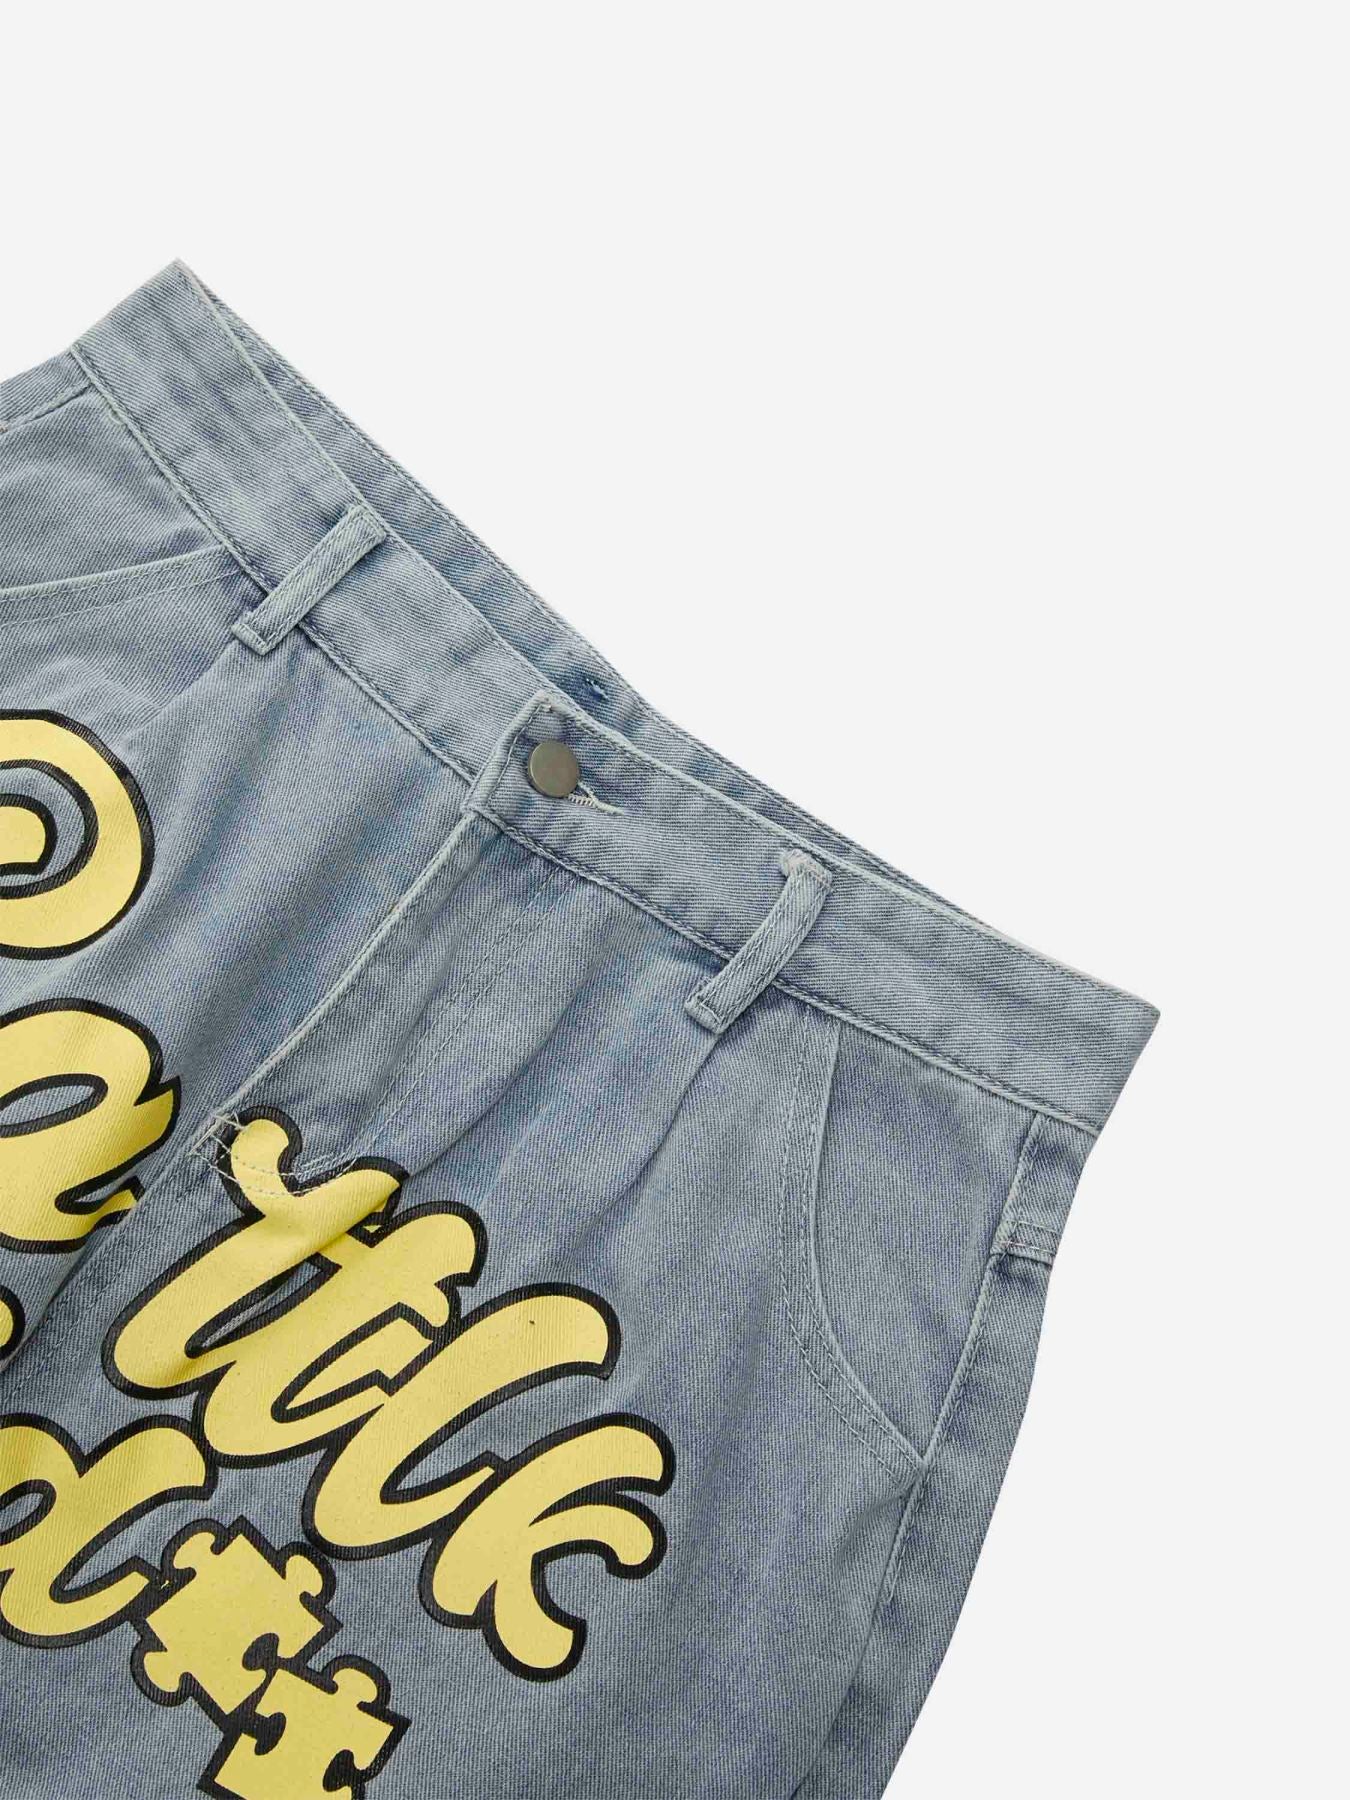 The Supermade Printed Denim Shorts